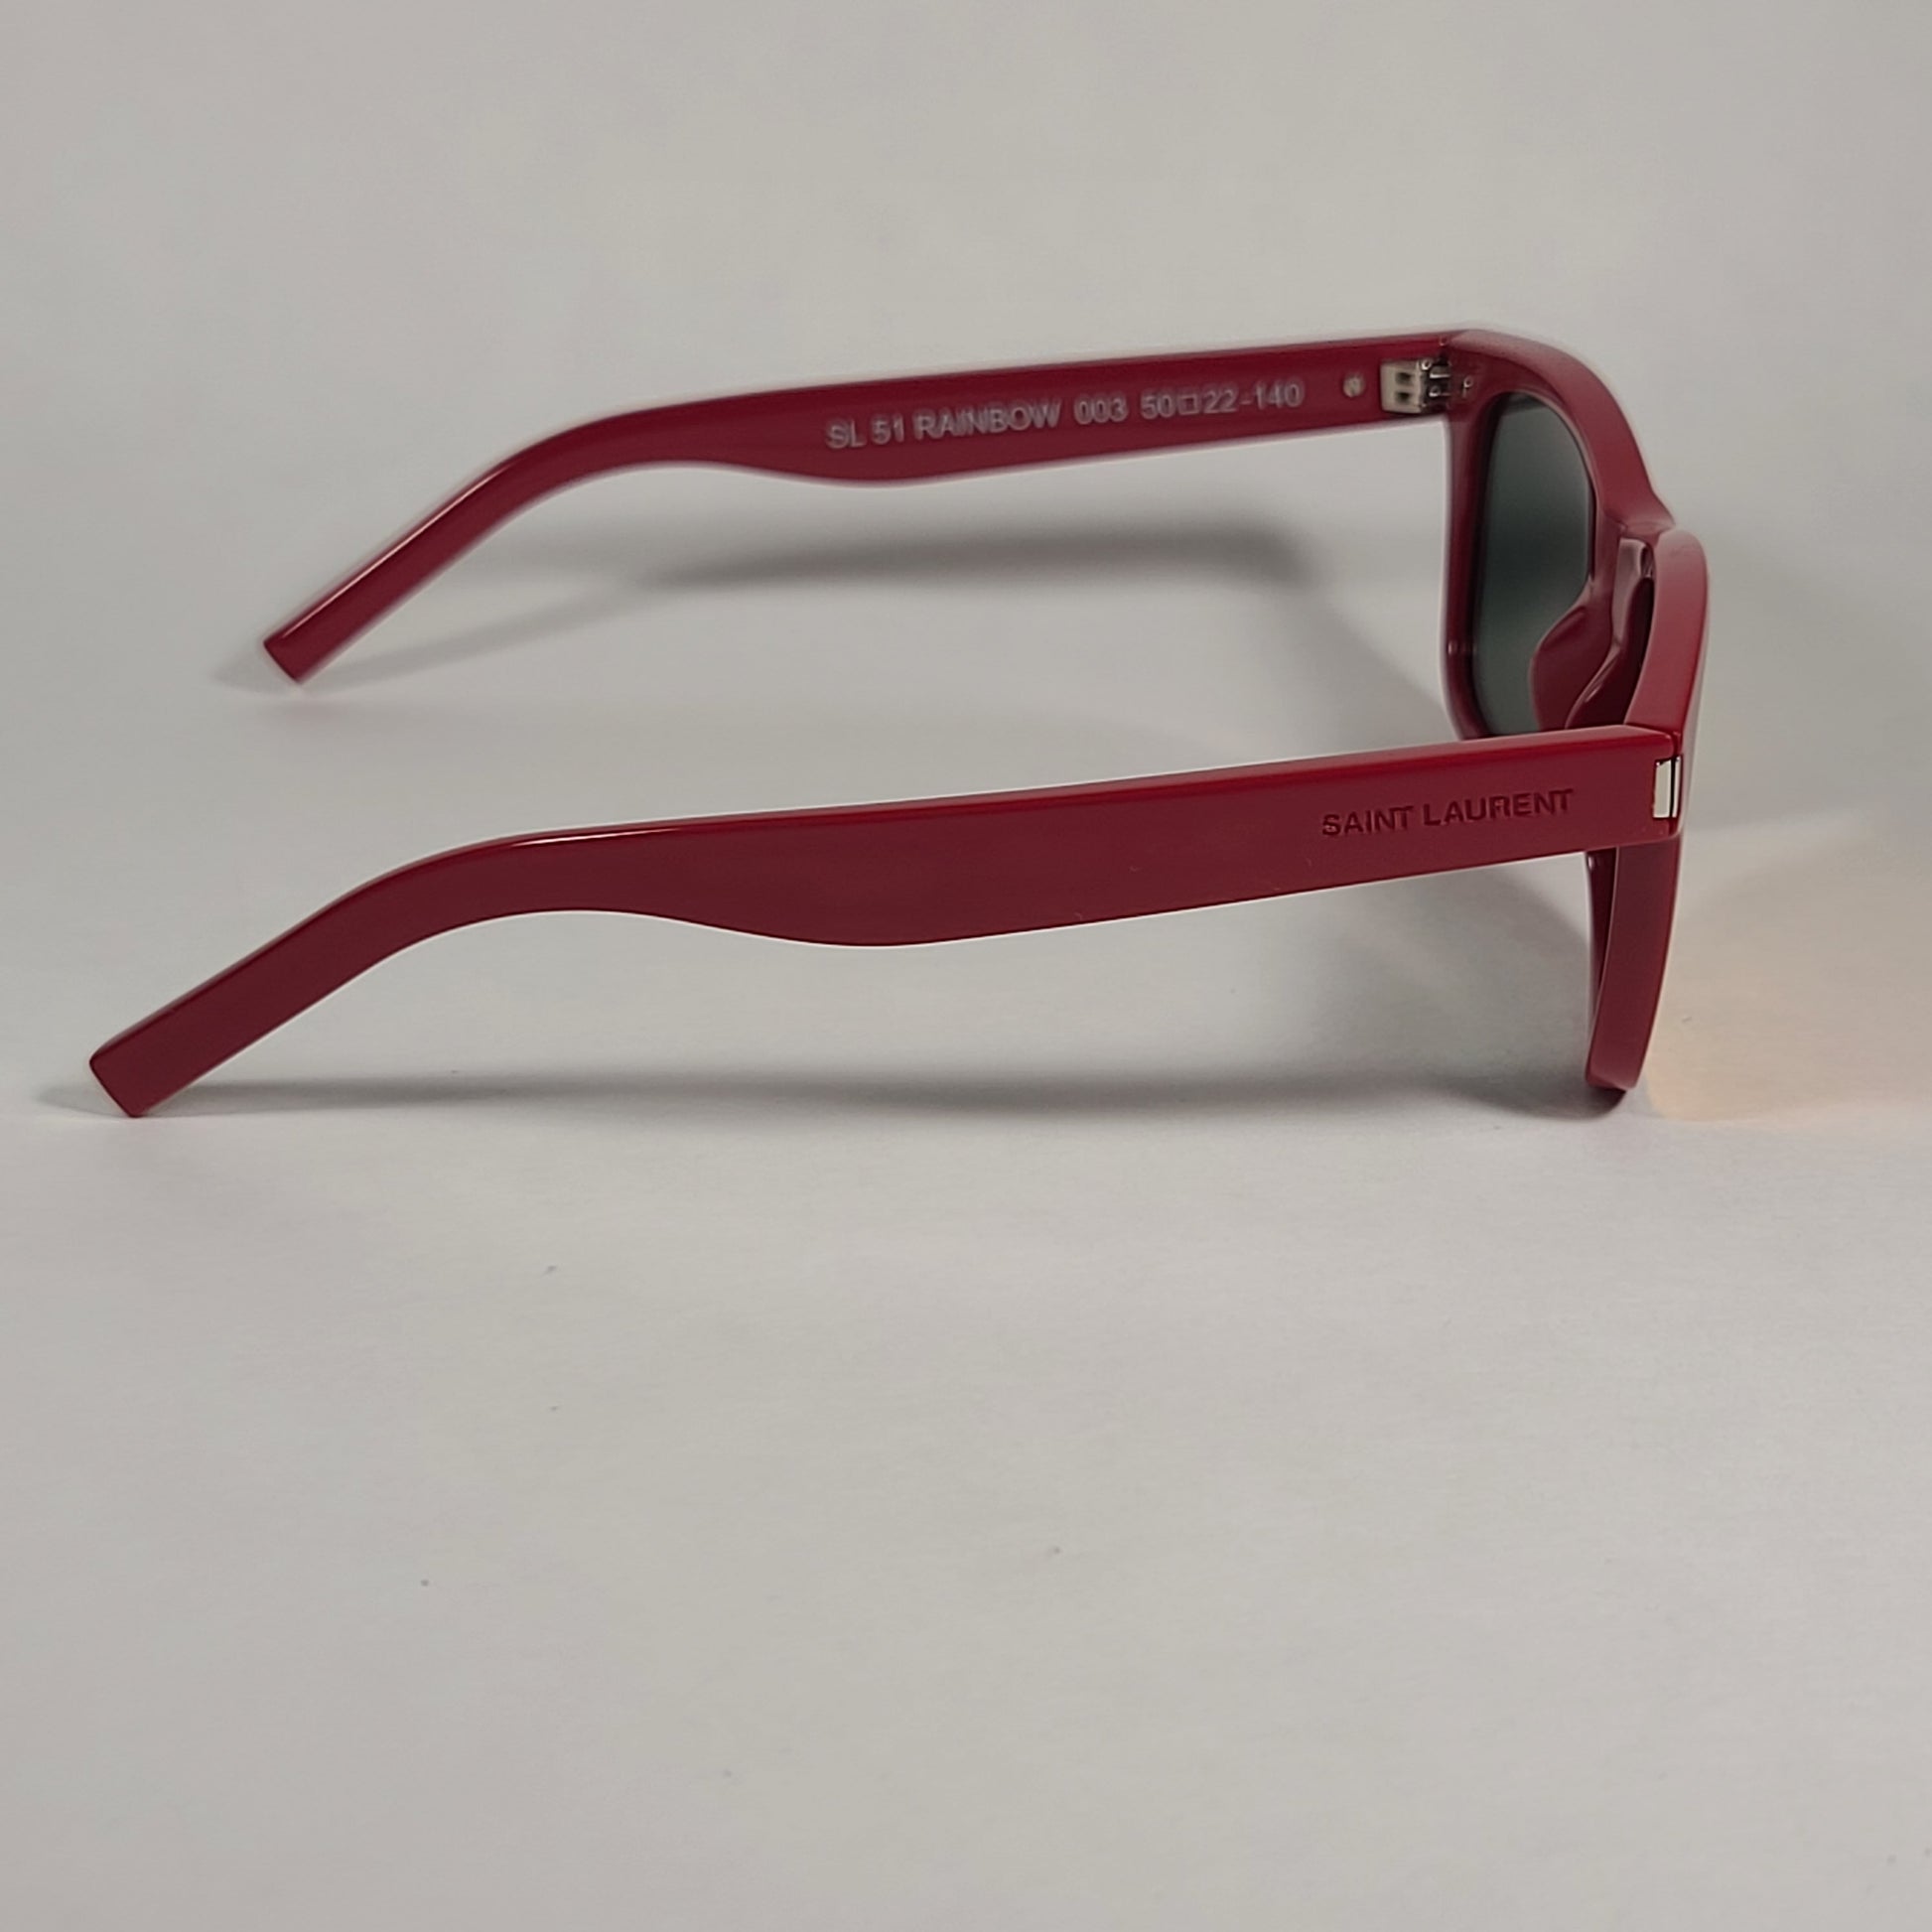 Saint Laurent Square Sunglasses Red Frame Orange Mirror Flash Lens SL51 RAINBOW 003 - Sunglasses